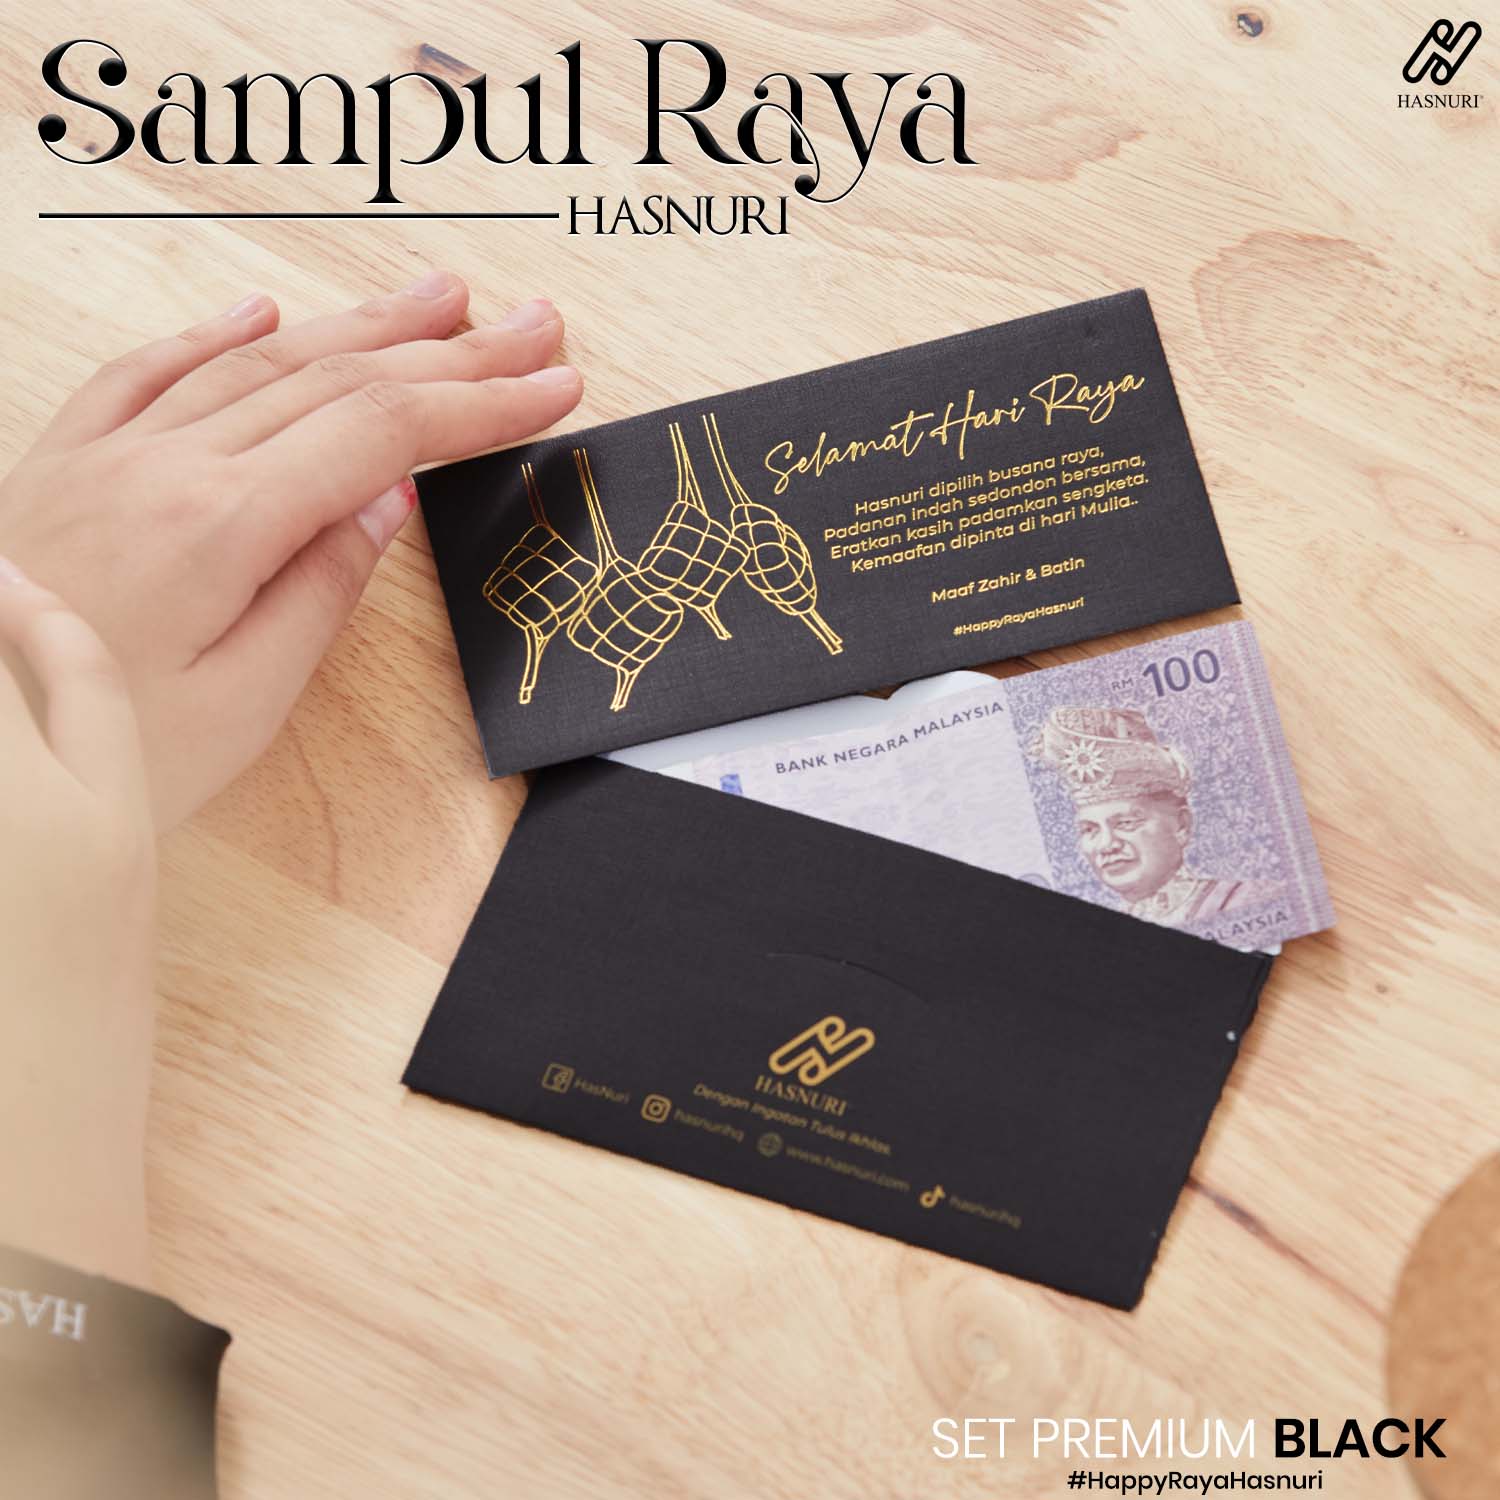 Sampul Raya Hasnuri - Black